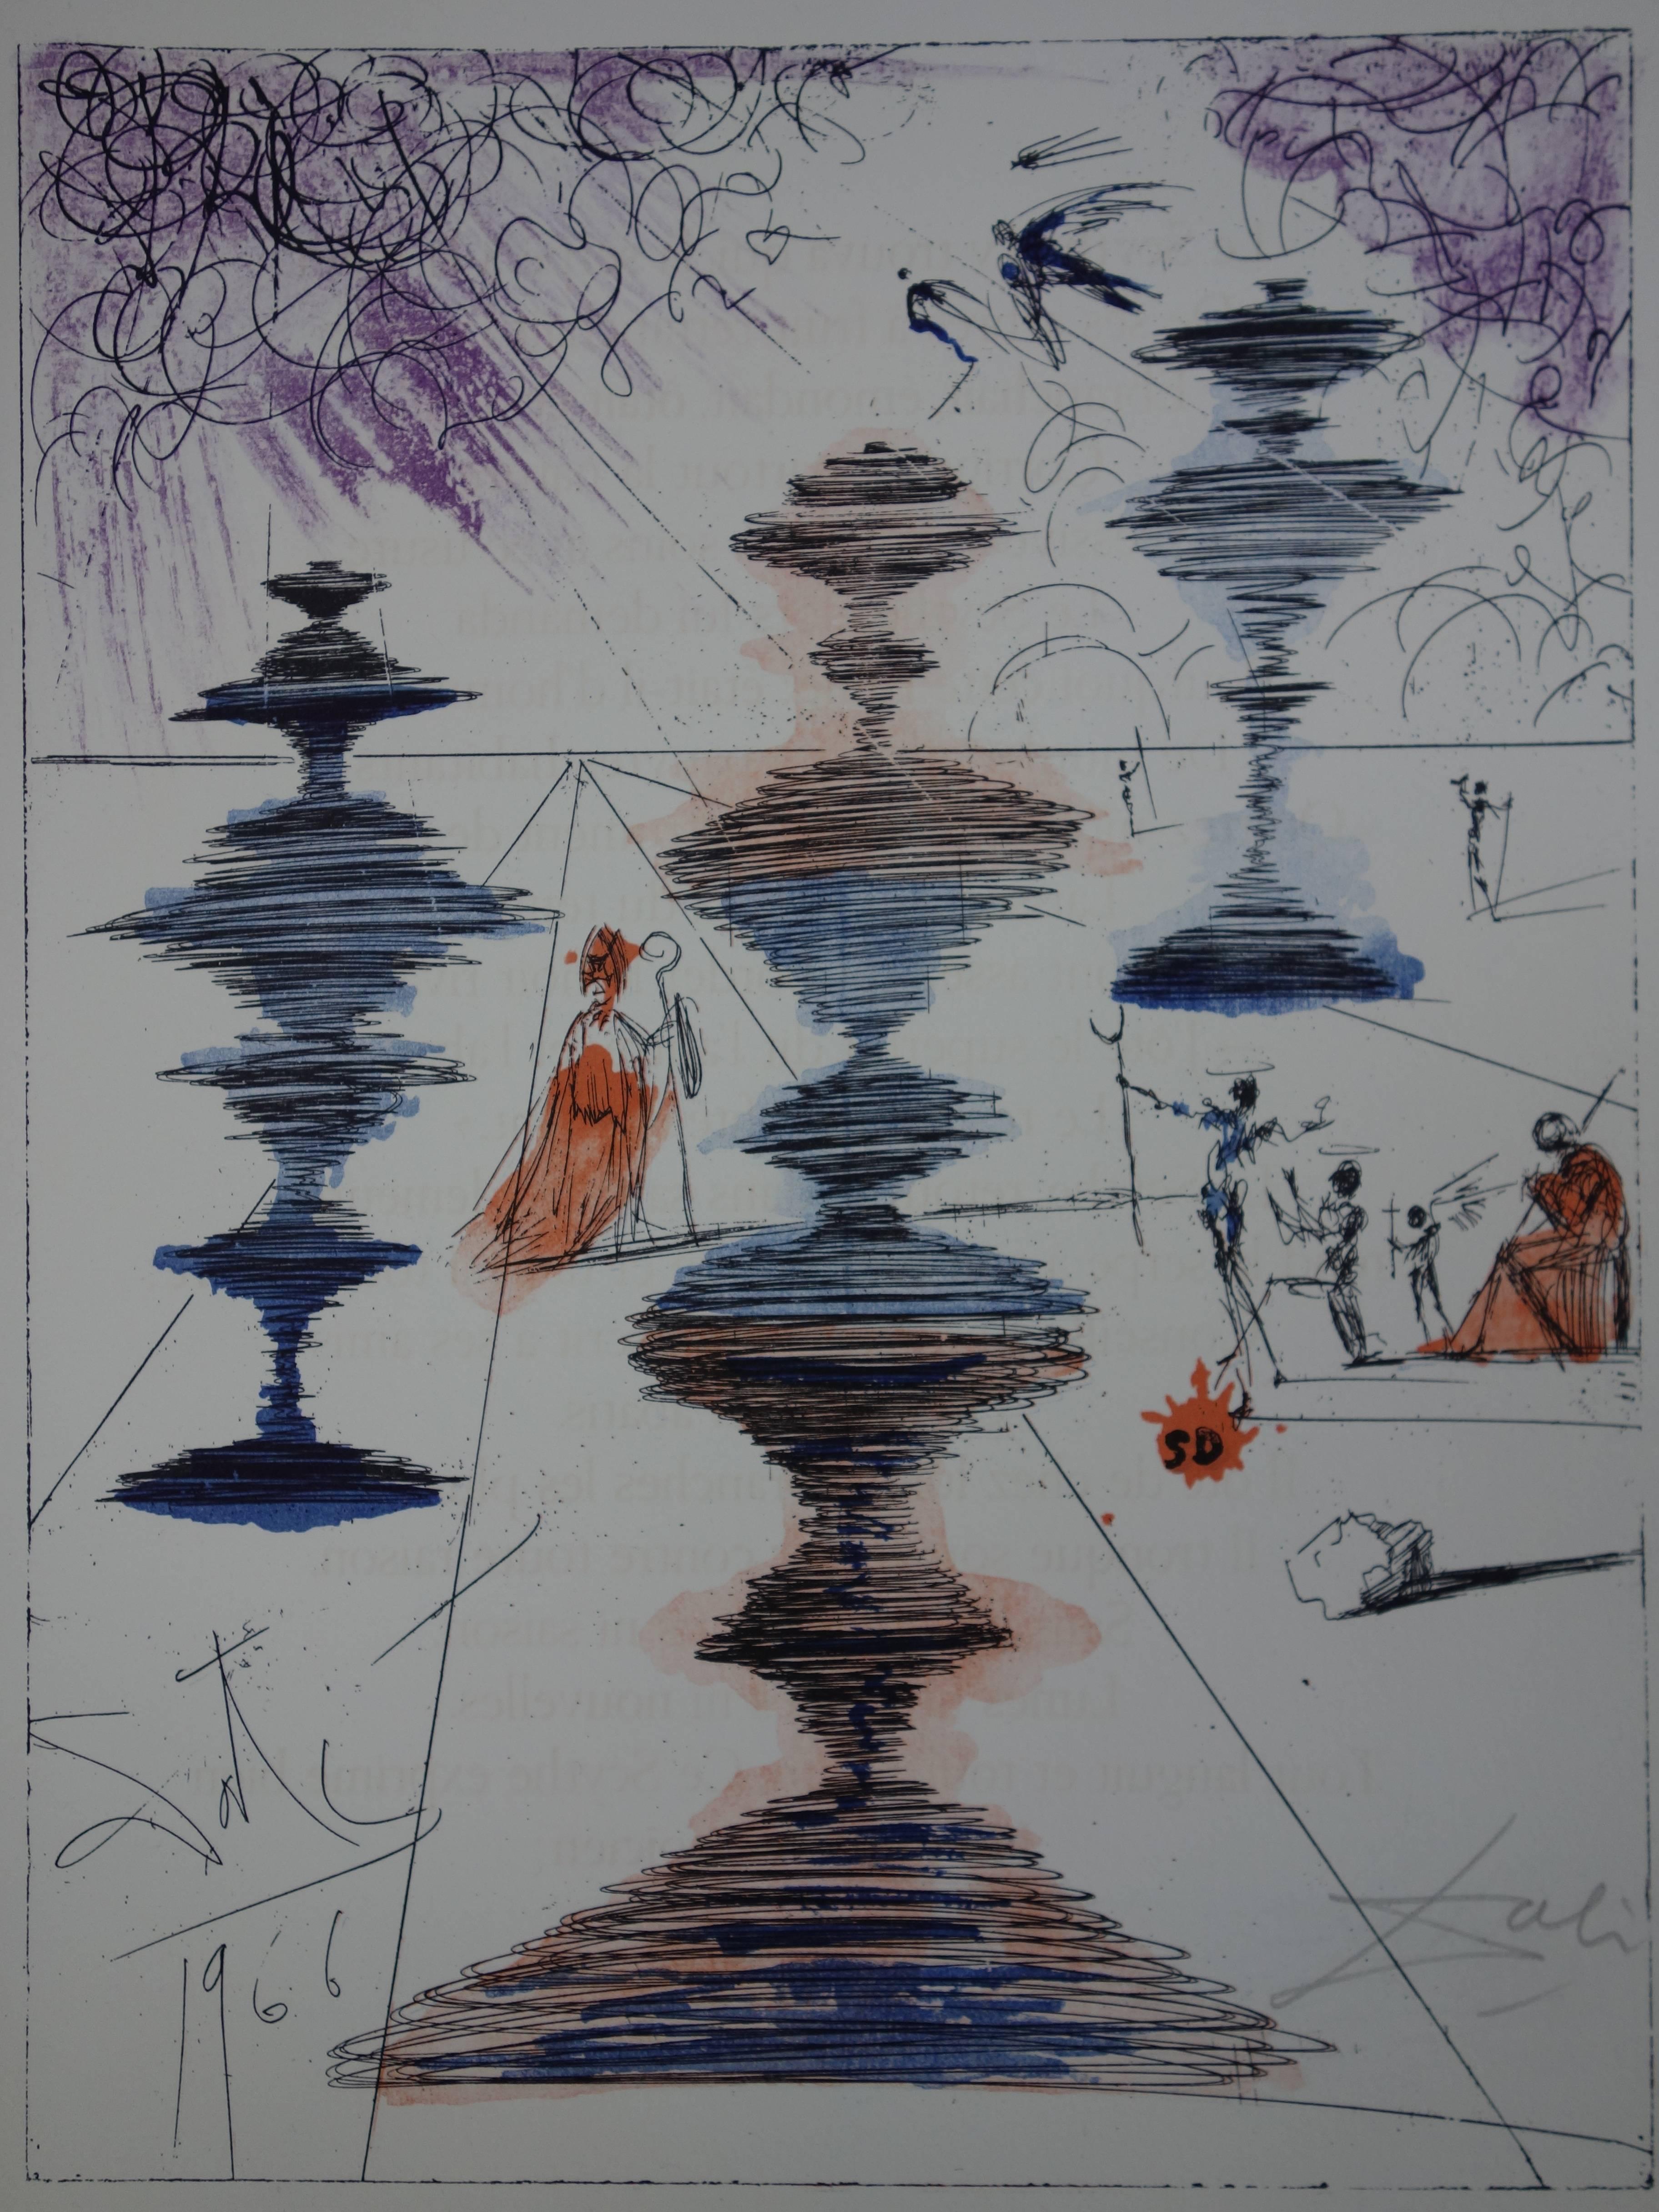 The Scythe Philosopher - Original handsigned lithograph - 1966 - Surrealist Print by Salvador Dalí